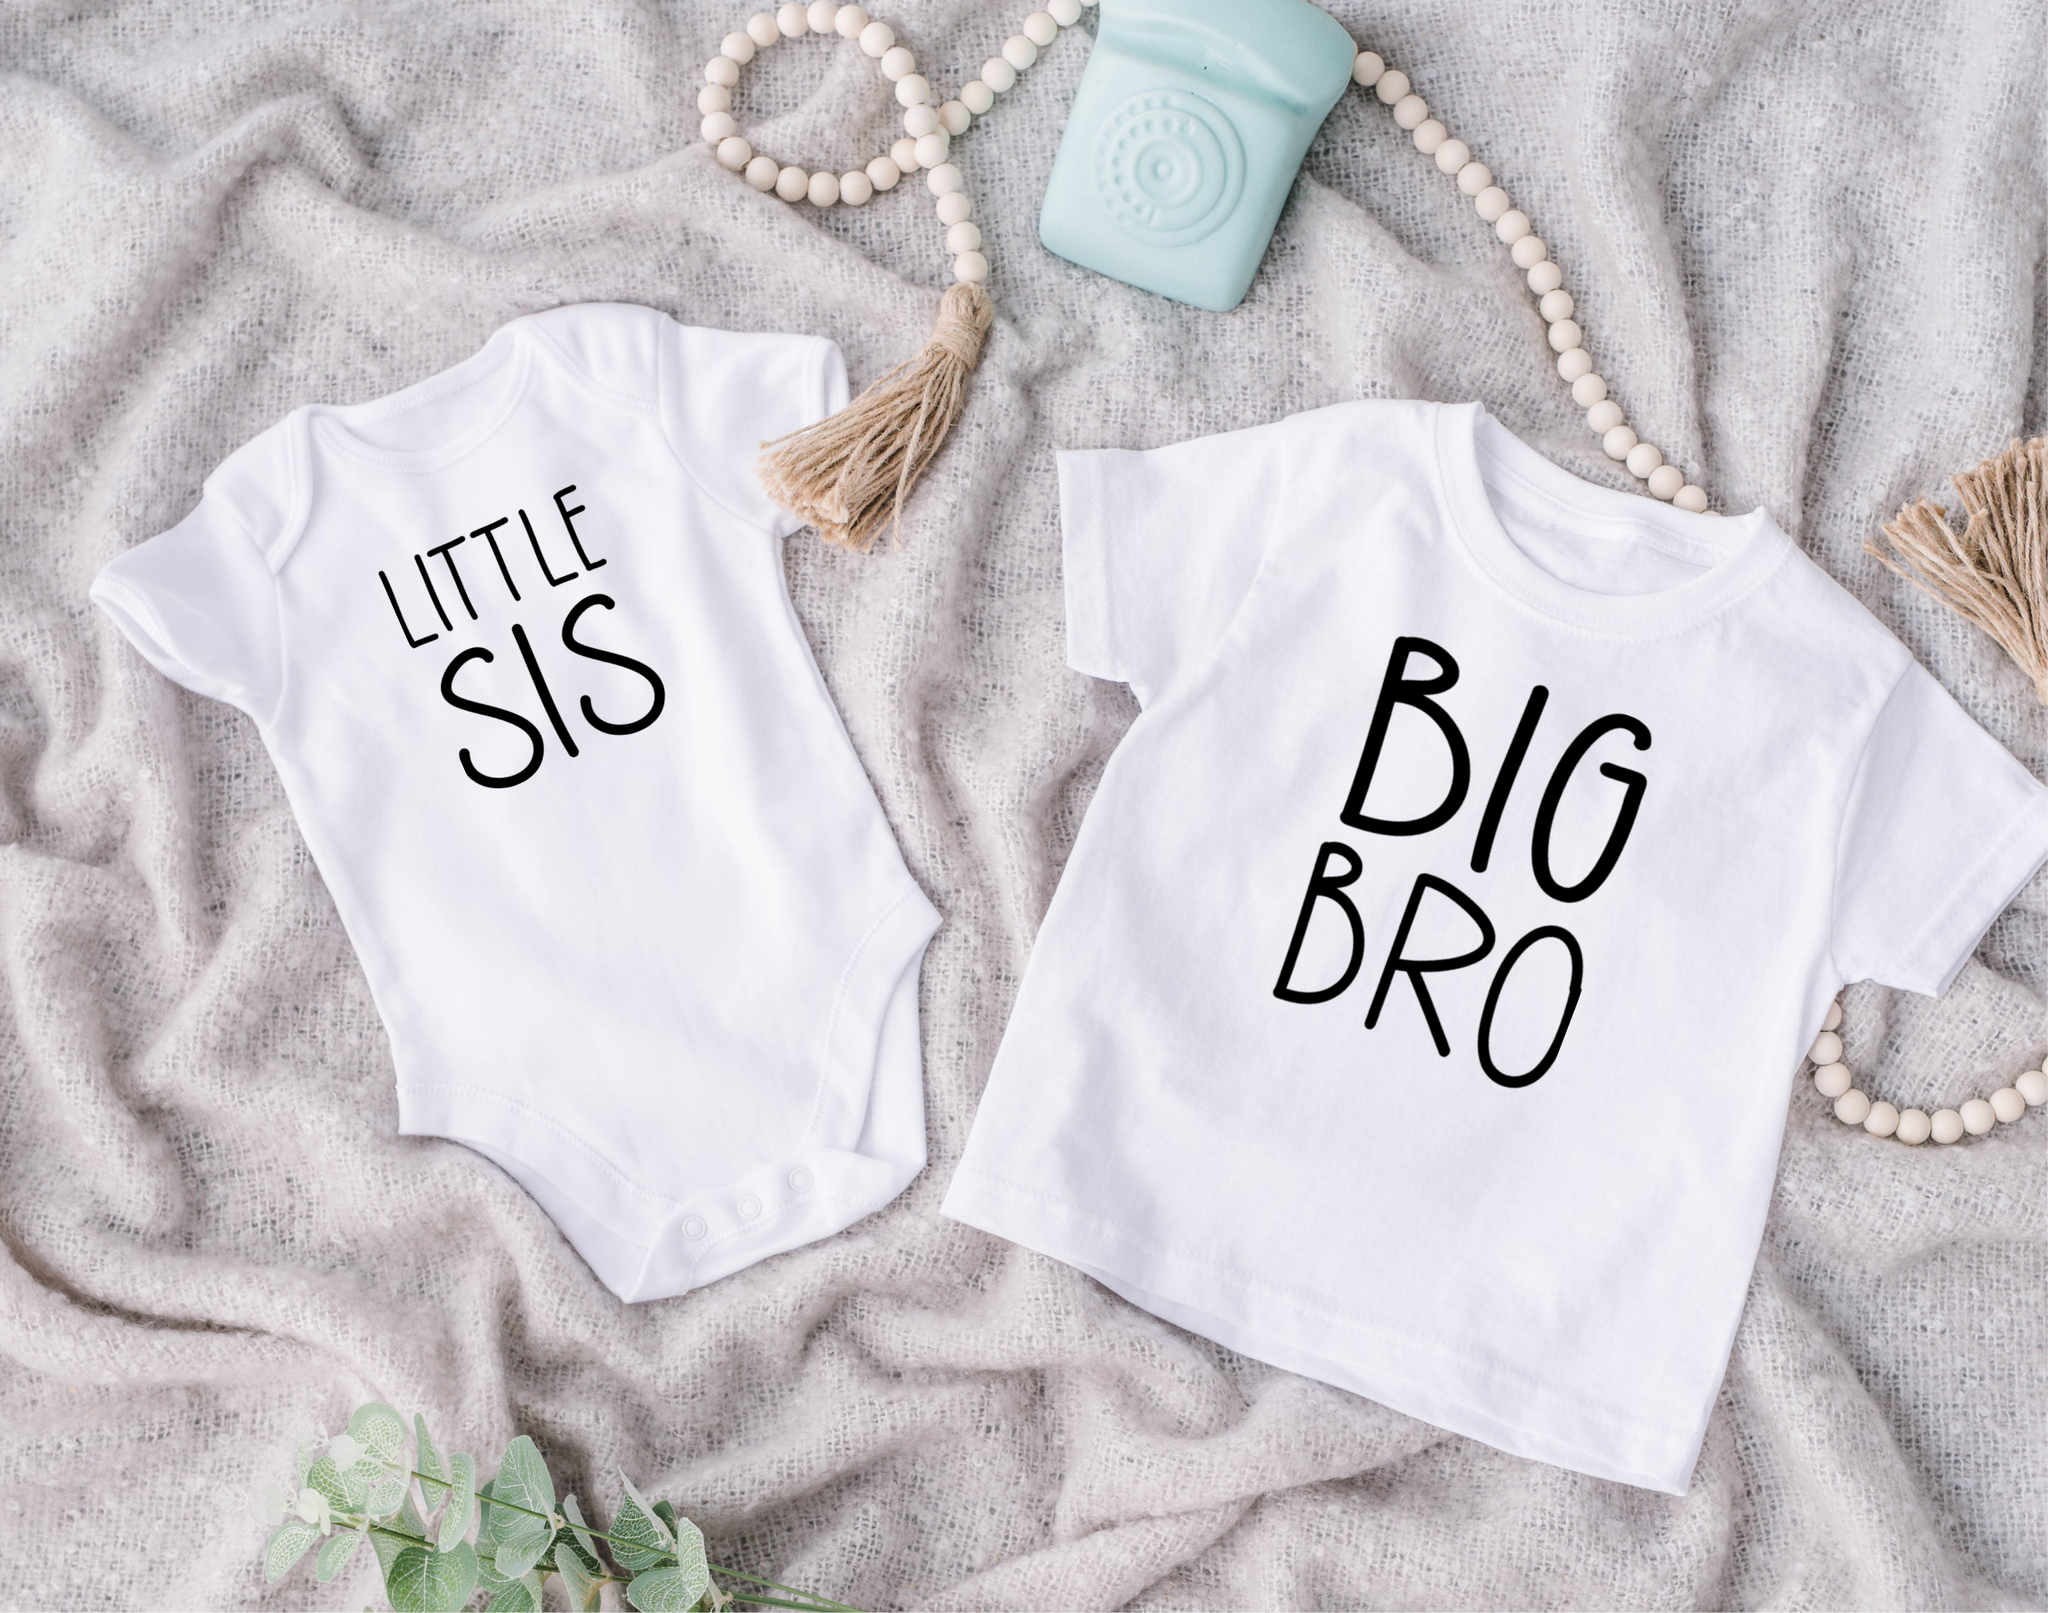 Big Bro, Little Bro, Big Sis, New Baby Announcement Shirts Live Craft Co